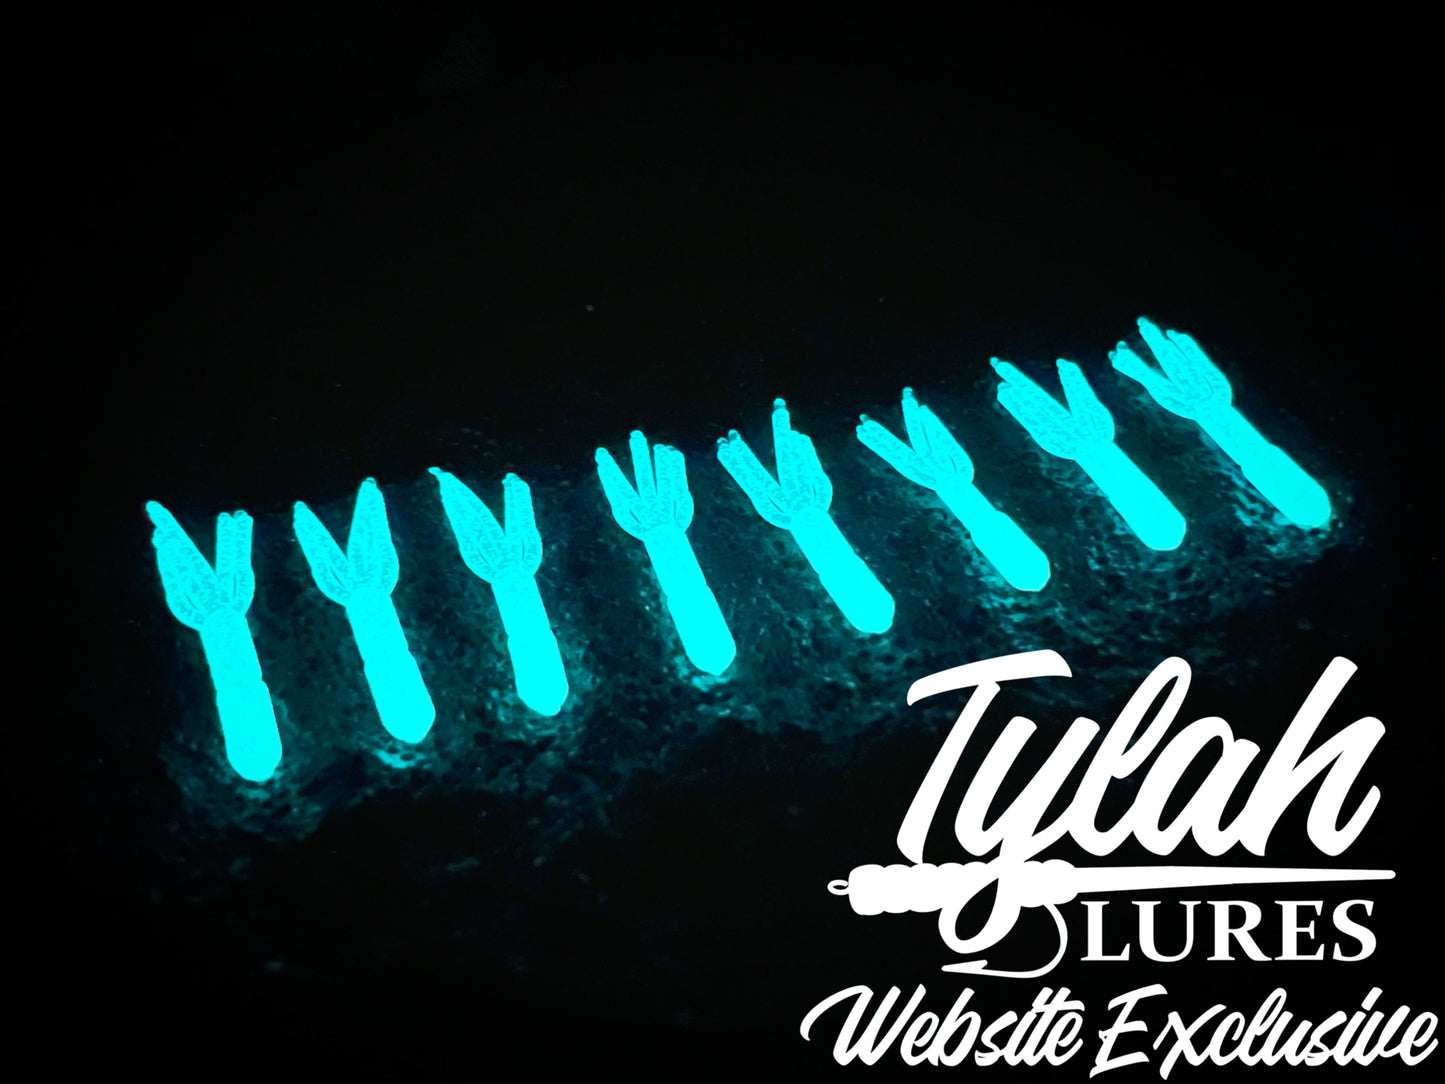 TylahLures Website Exclusive UV Pearl Aqua Glow Shidasa 1in